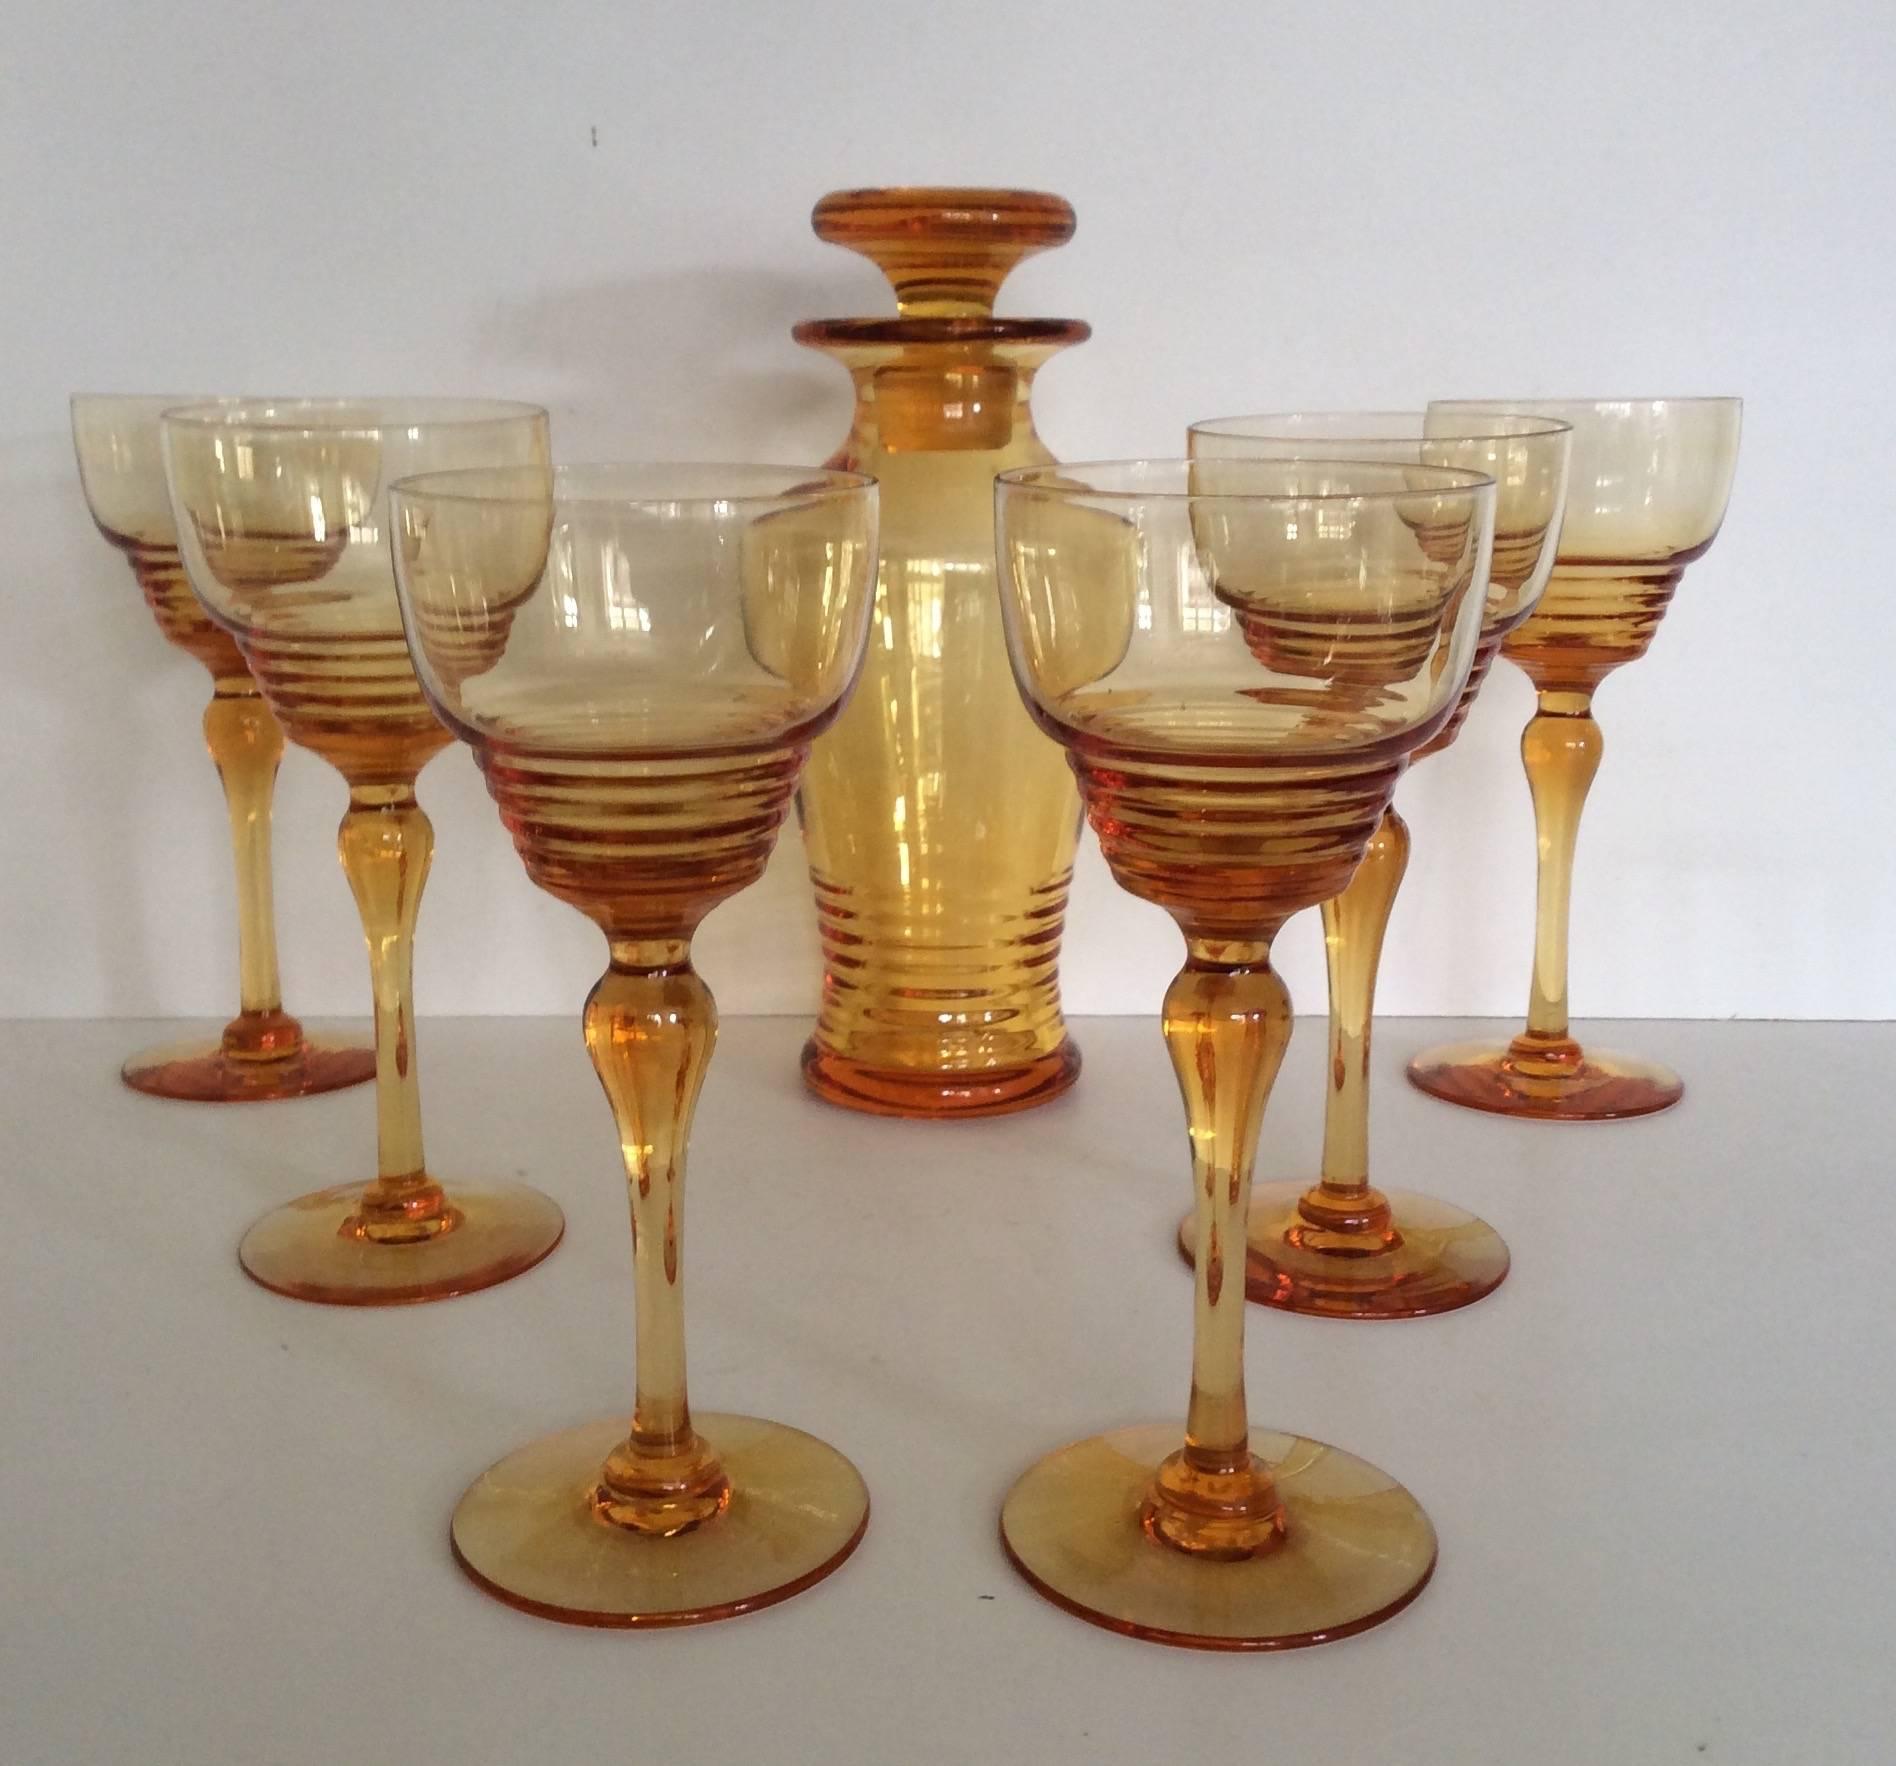 A set of Art Deco Hock glasses and decanter.
Stuart crystal Art Deco amber glass set, six Hock glasses with matching decanter.
British, circa 1930.
Measures: Glasses 17.5 cm height, 7.5 cm diameter.
Decanter 22 cm height, 10 cm diameter.